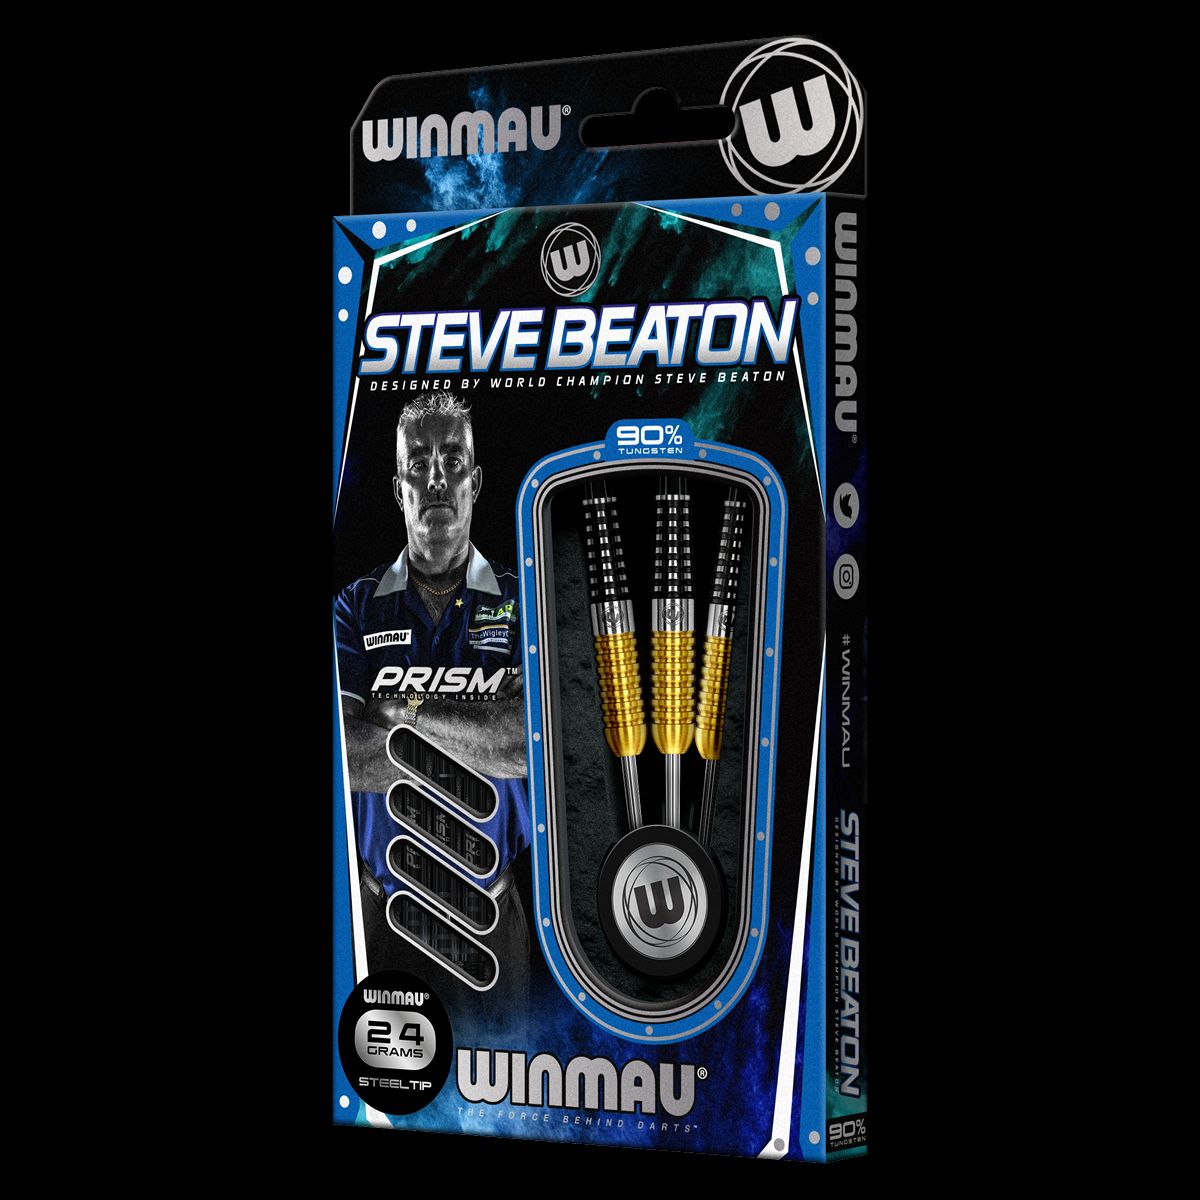 Winmau Steve Beaton 24g special edition steel tip dart set